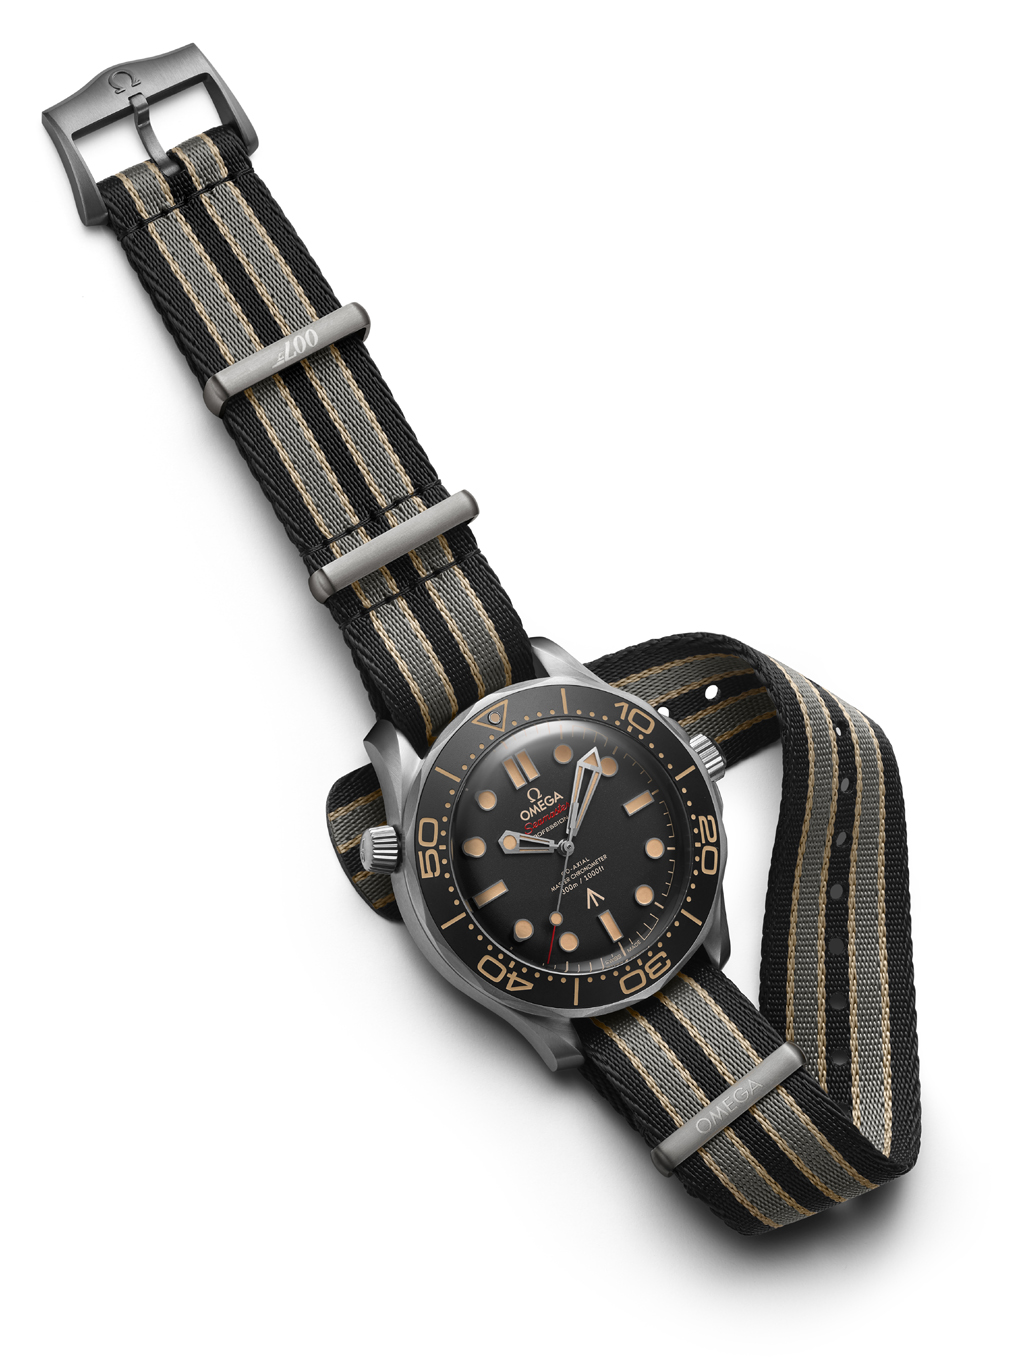 Omega Seamaster Diver 300M 007 Edition 腕表發佈 